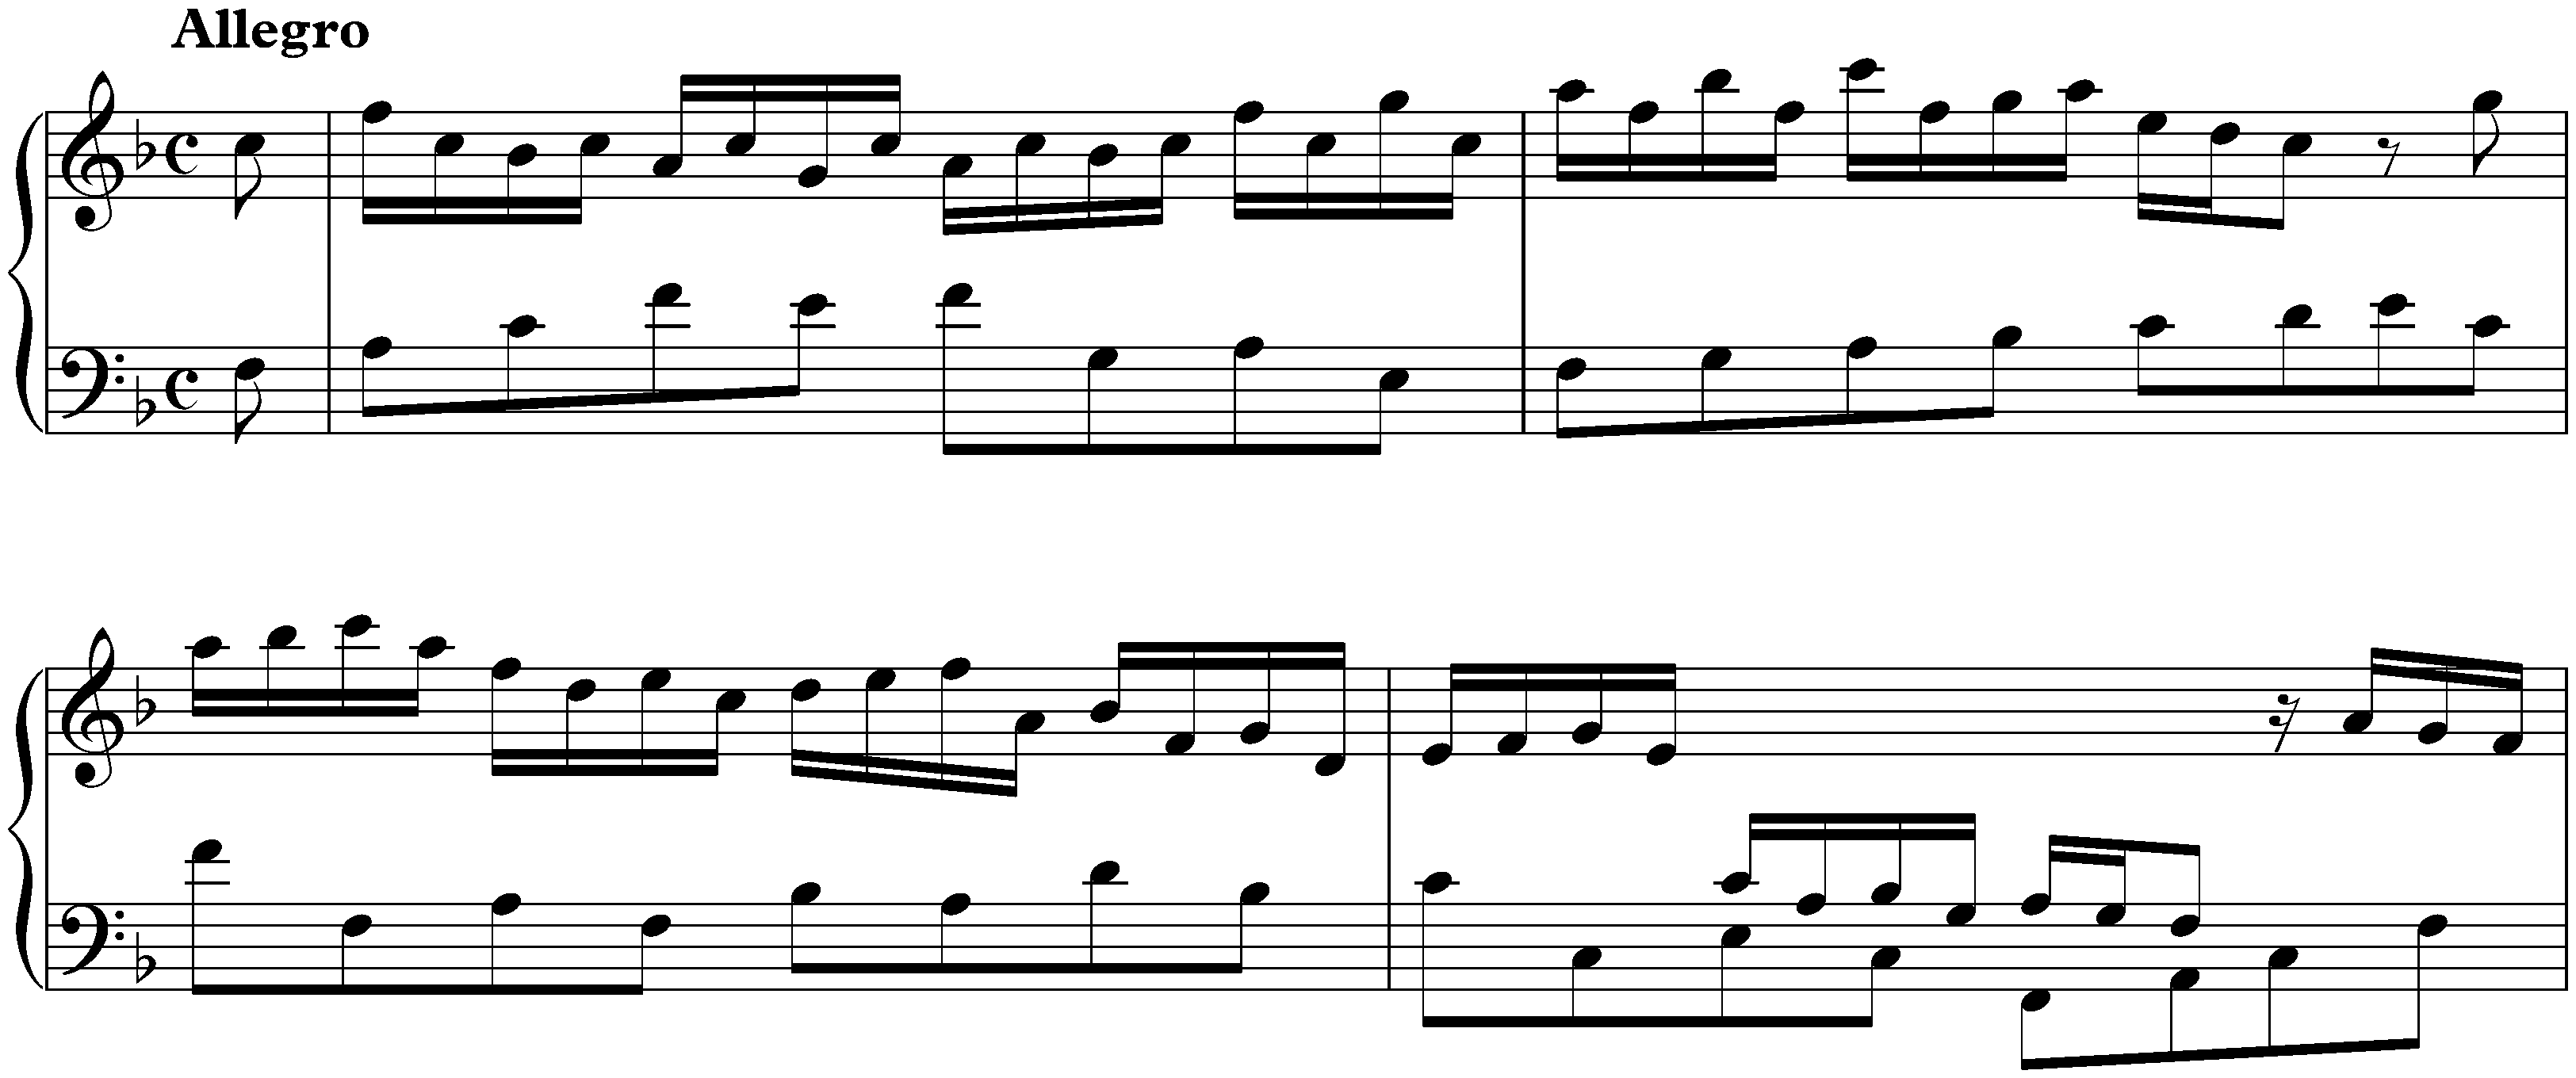 Suite in F major, HWV 427; 2. Allegro